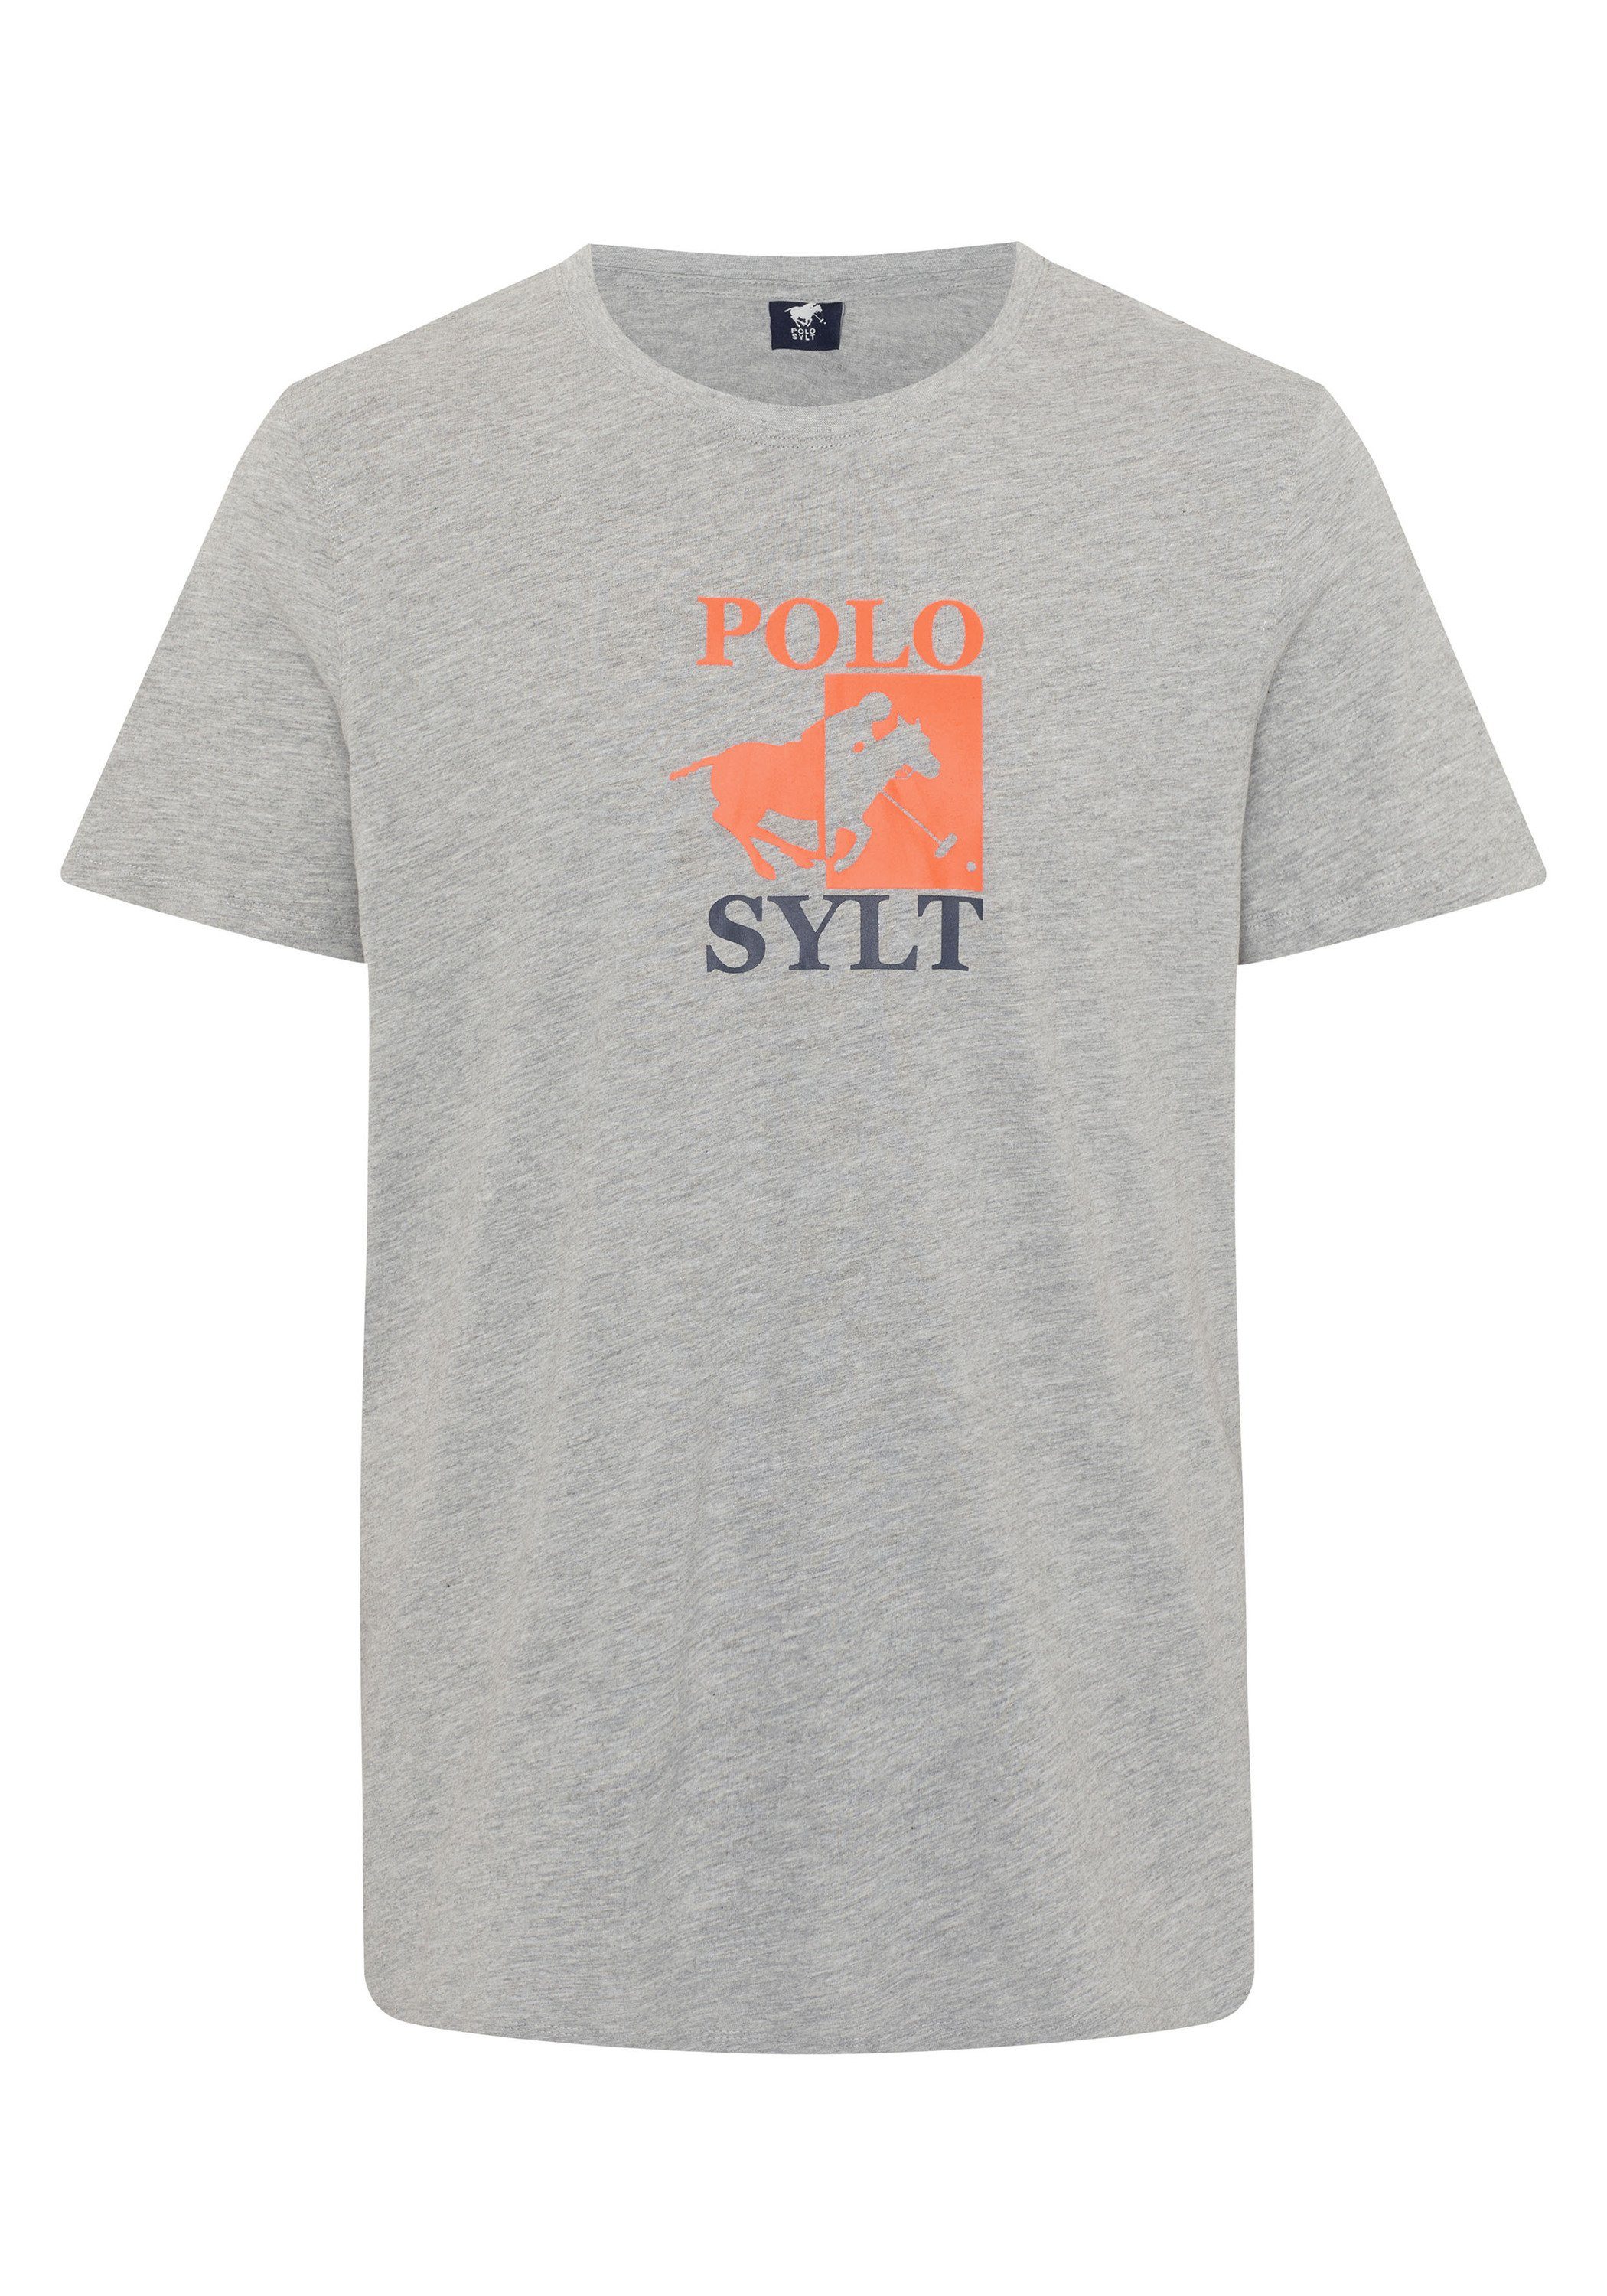 Polo Sylt Print-Shirt mit großem Logoprint 17-4402M Neutral Gray Melange